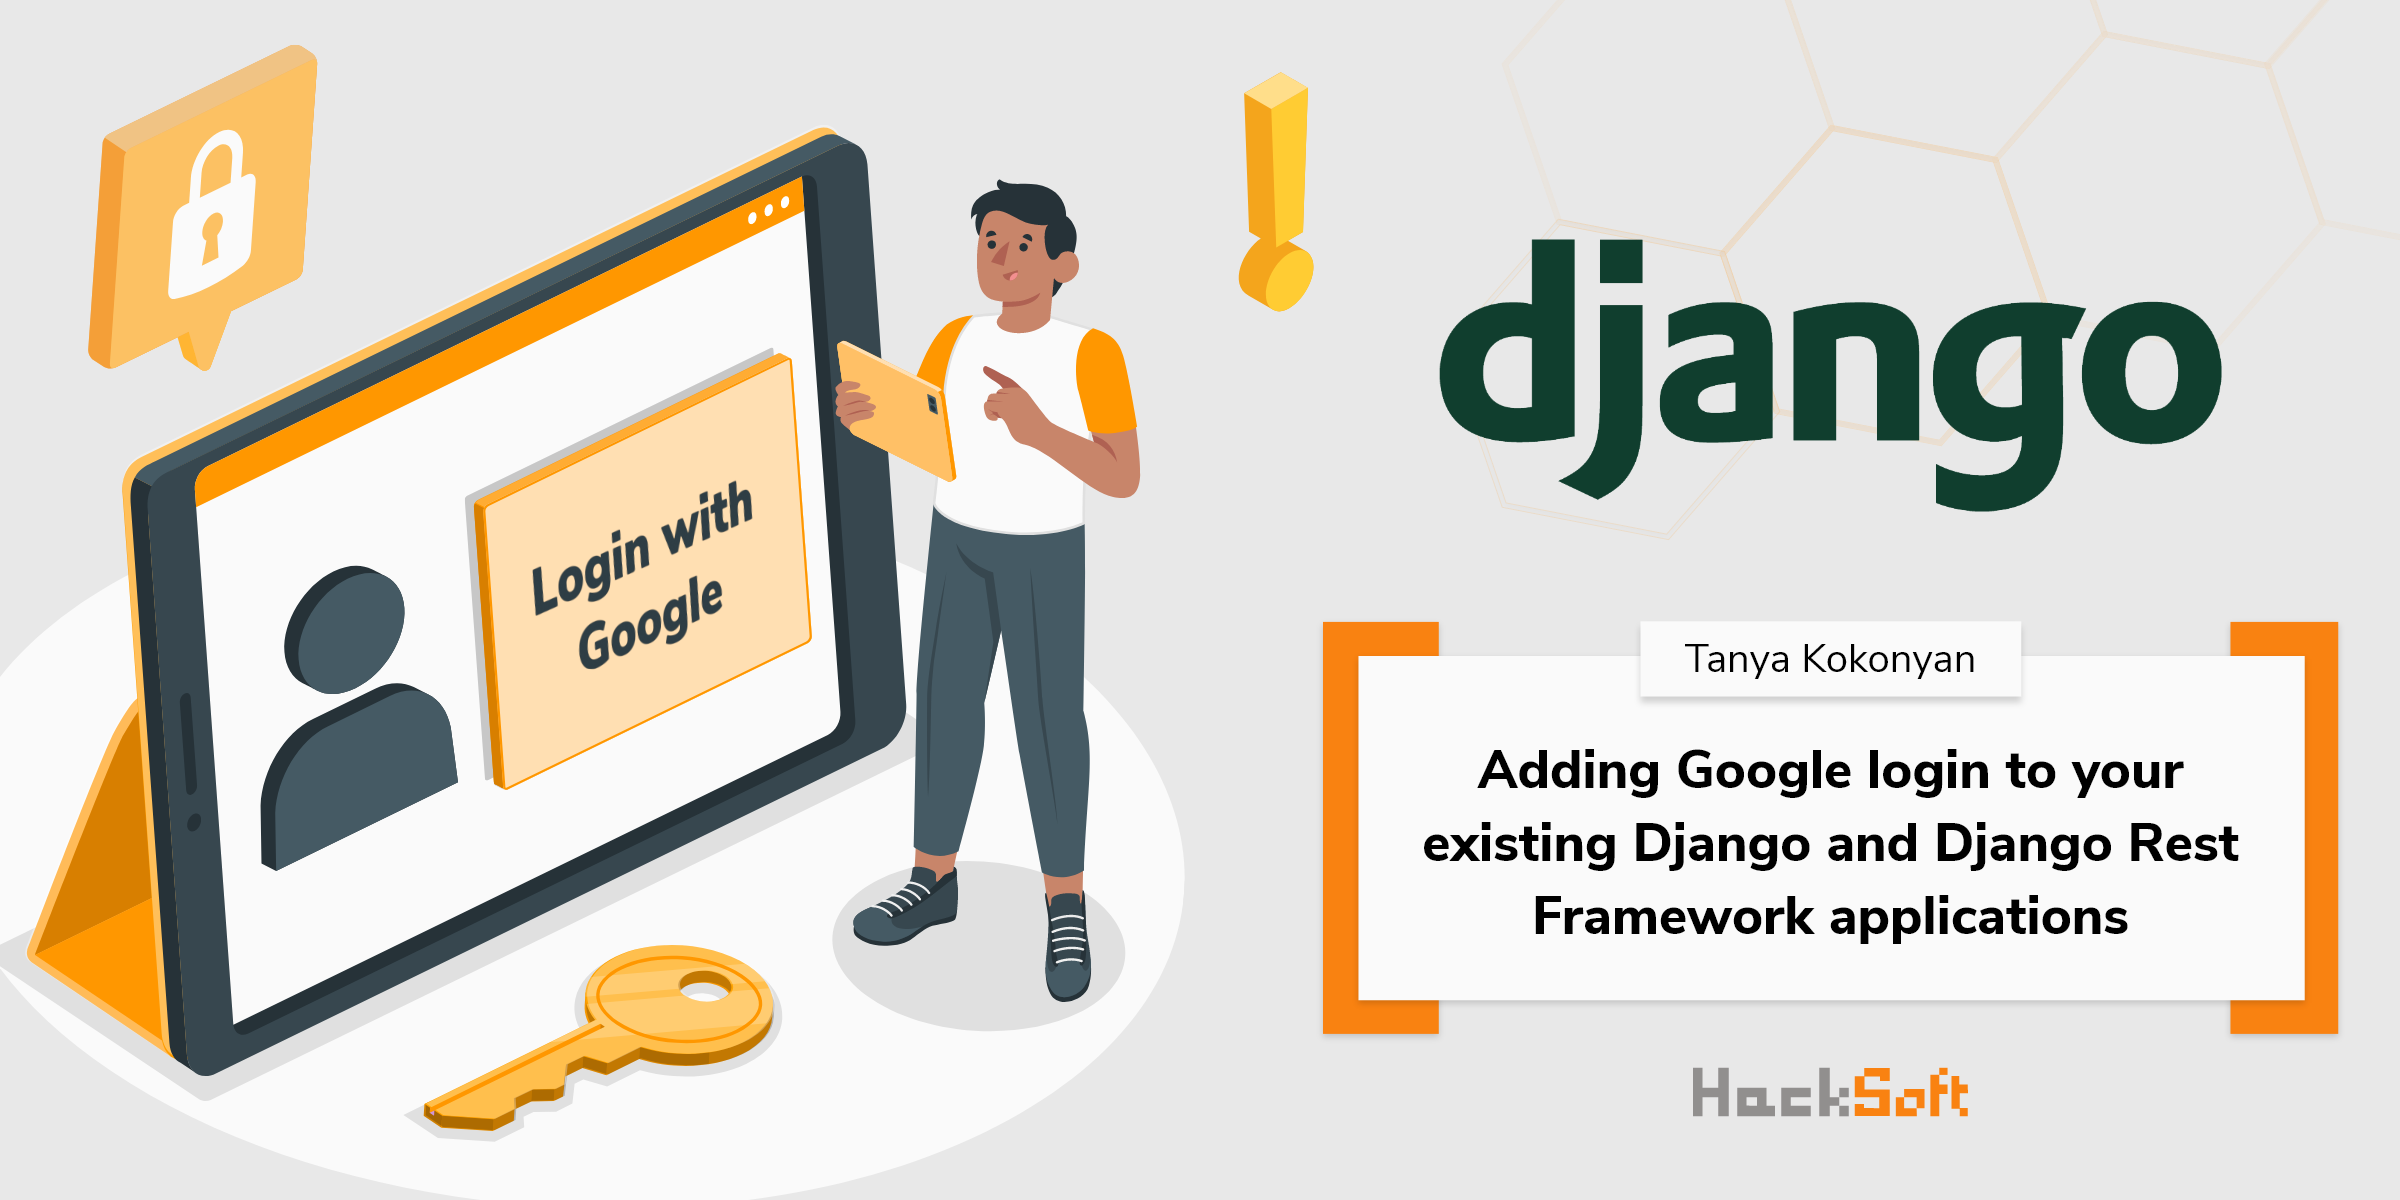 Adding Google login to your existing Django and Django Rest Framework applications